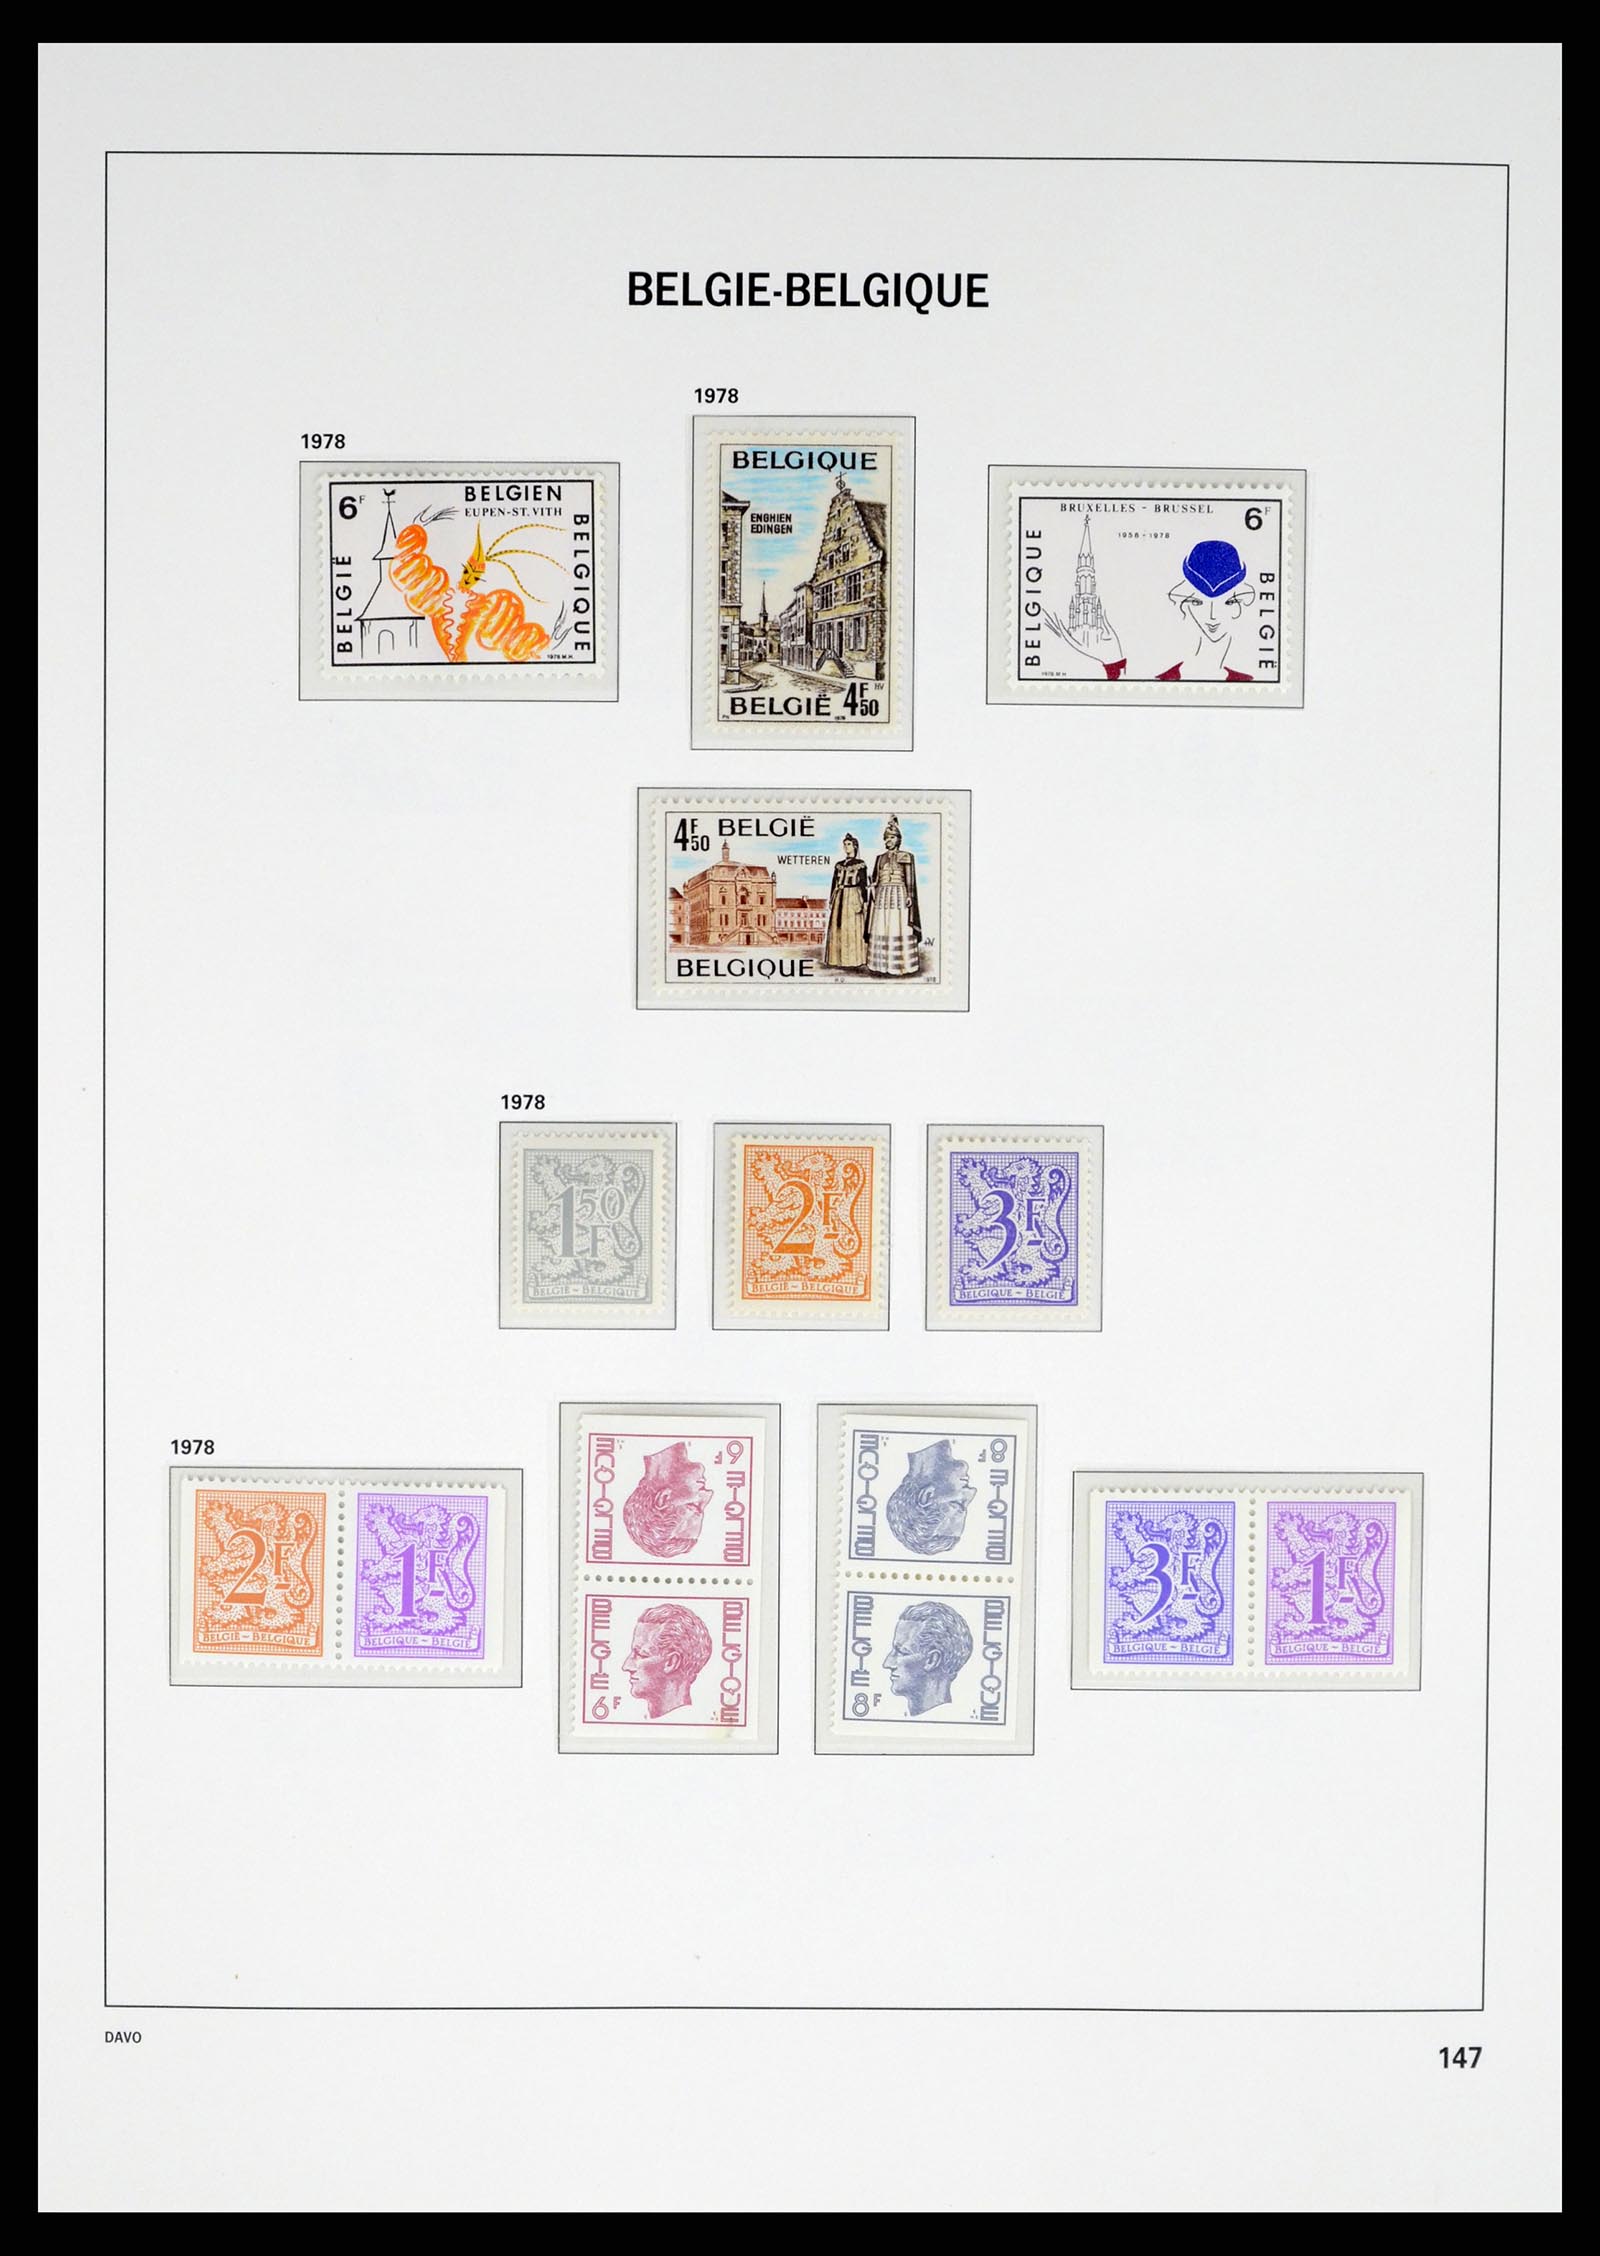 37368 036 - Stamp collection 37368 Belgium 1969-2003.